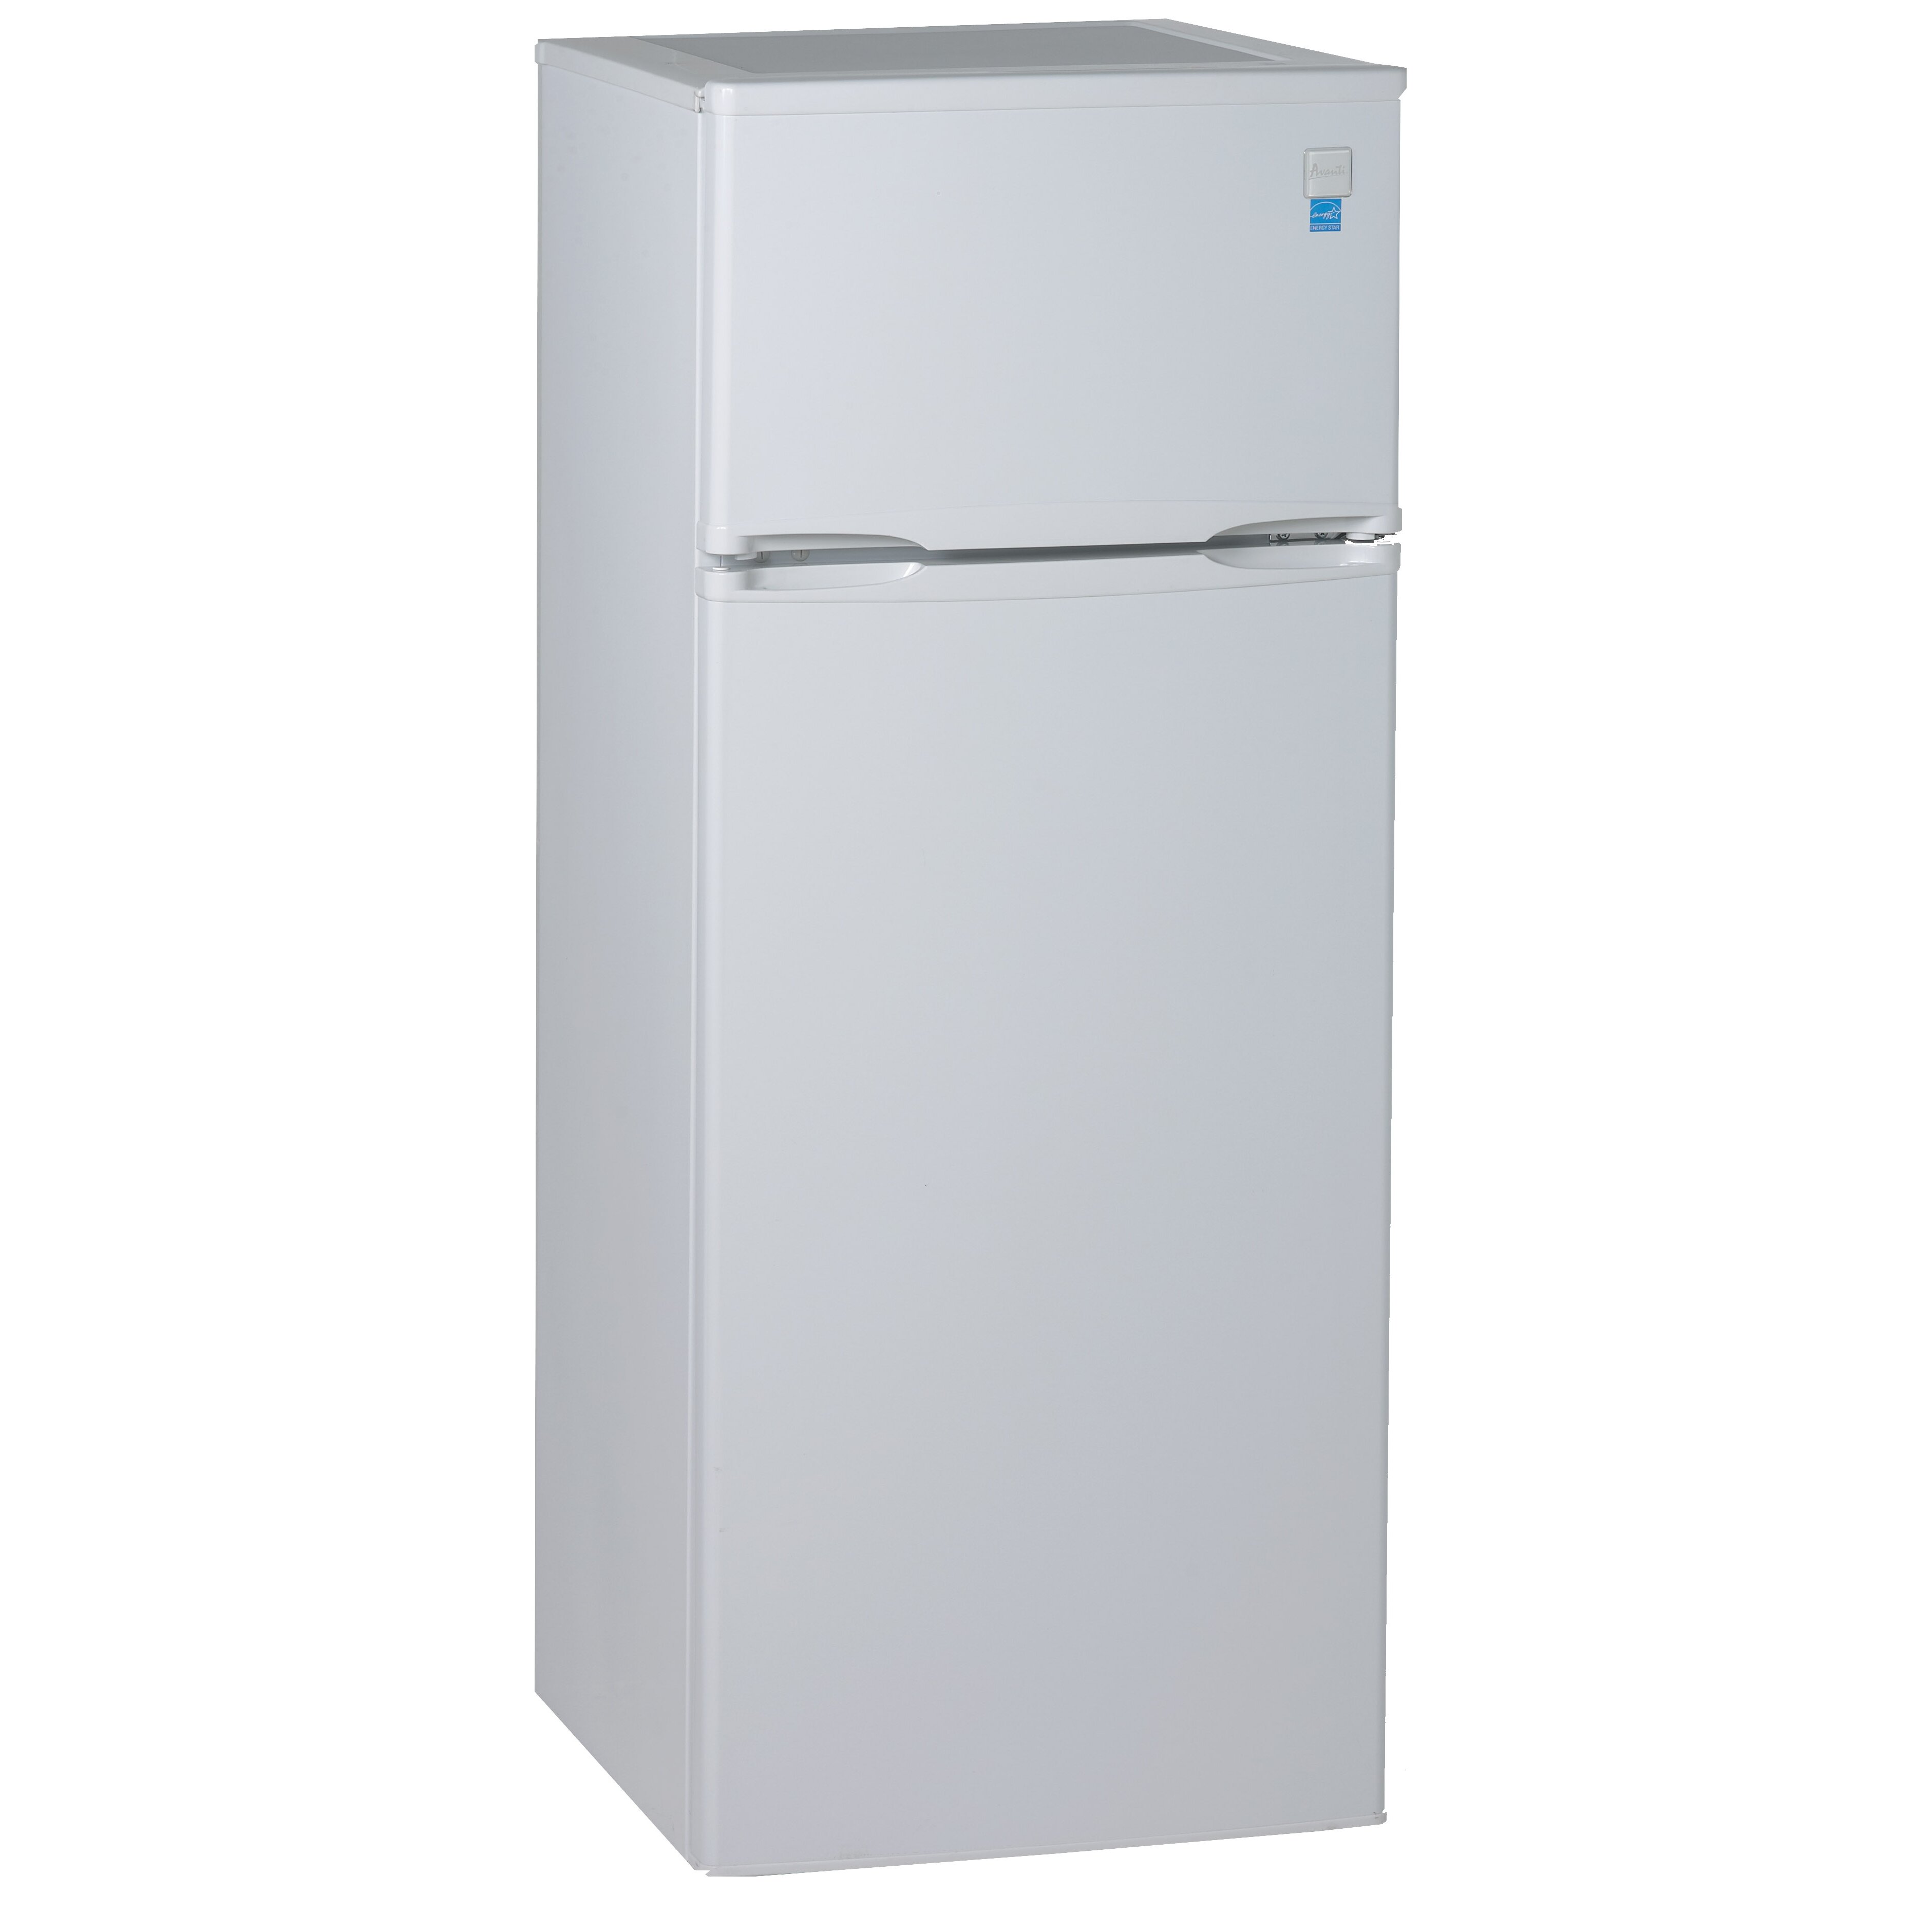 Avanti 7 4 Cu Ft Compact Refrigerator And Reviews Wayfair Ca